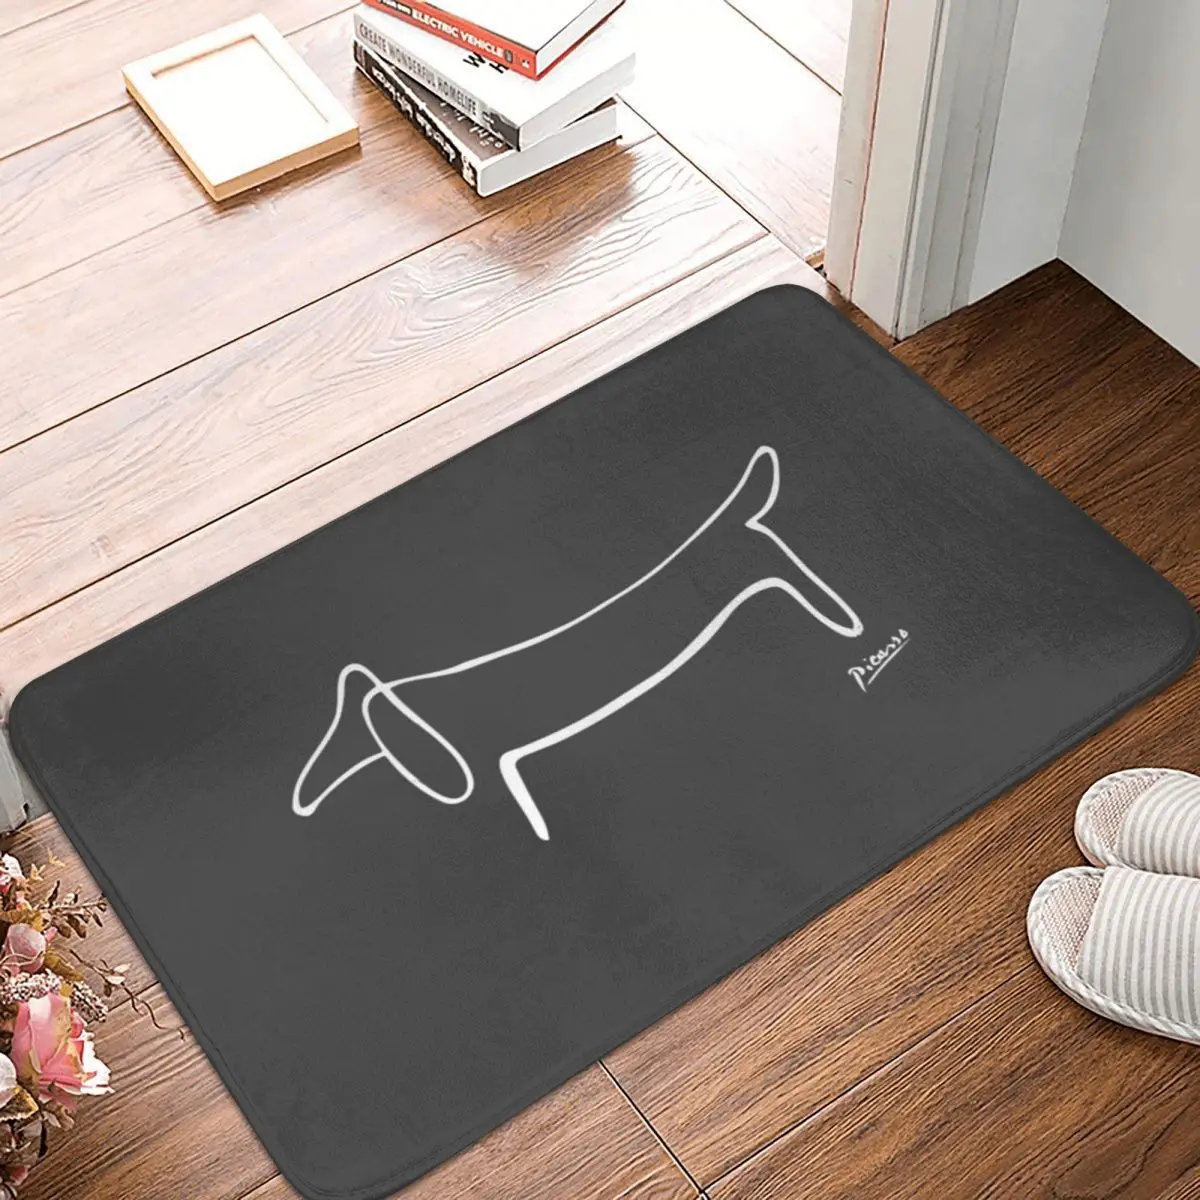 

Pablo Picasso Wild Wiener Dog Dachshund Doormat Rug Carpet Mat Footpad Polyester Non-slip Water Oil Proof Front Room Corridor